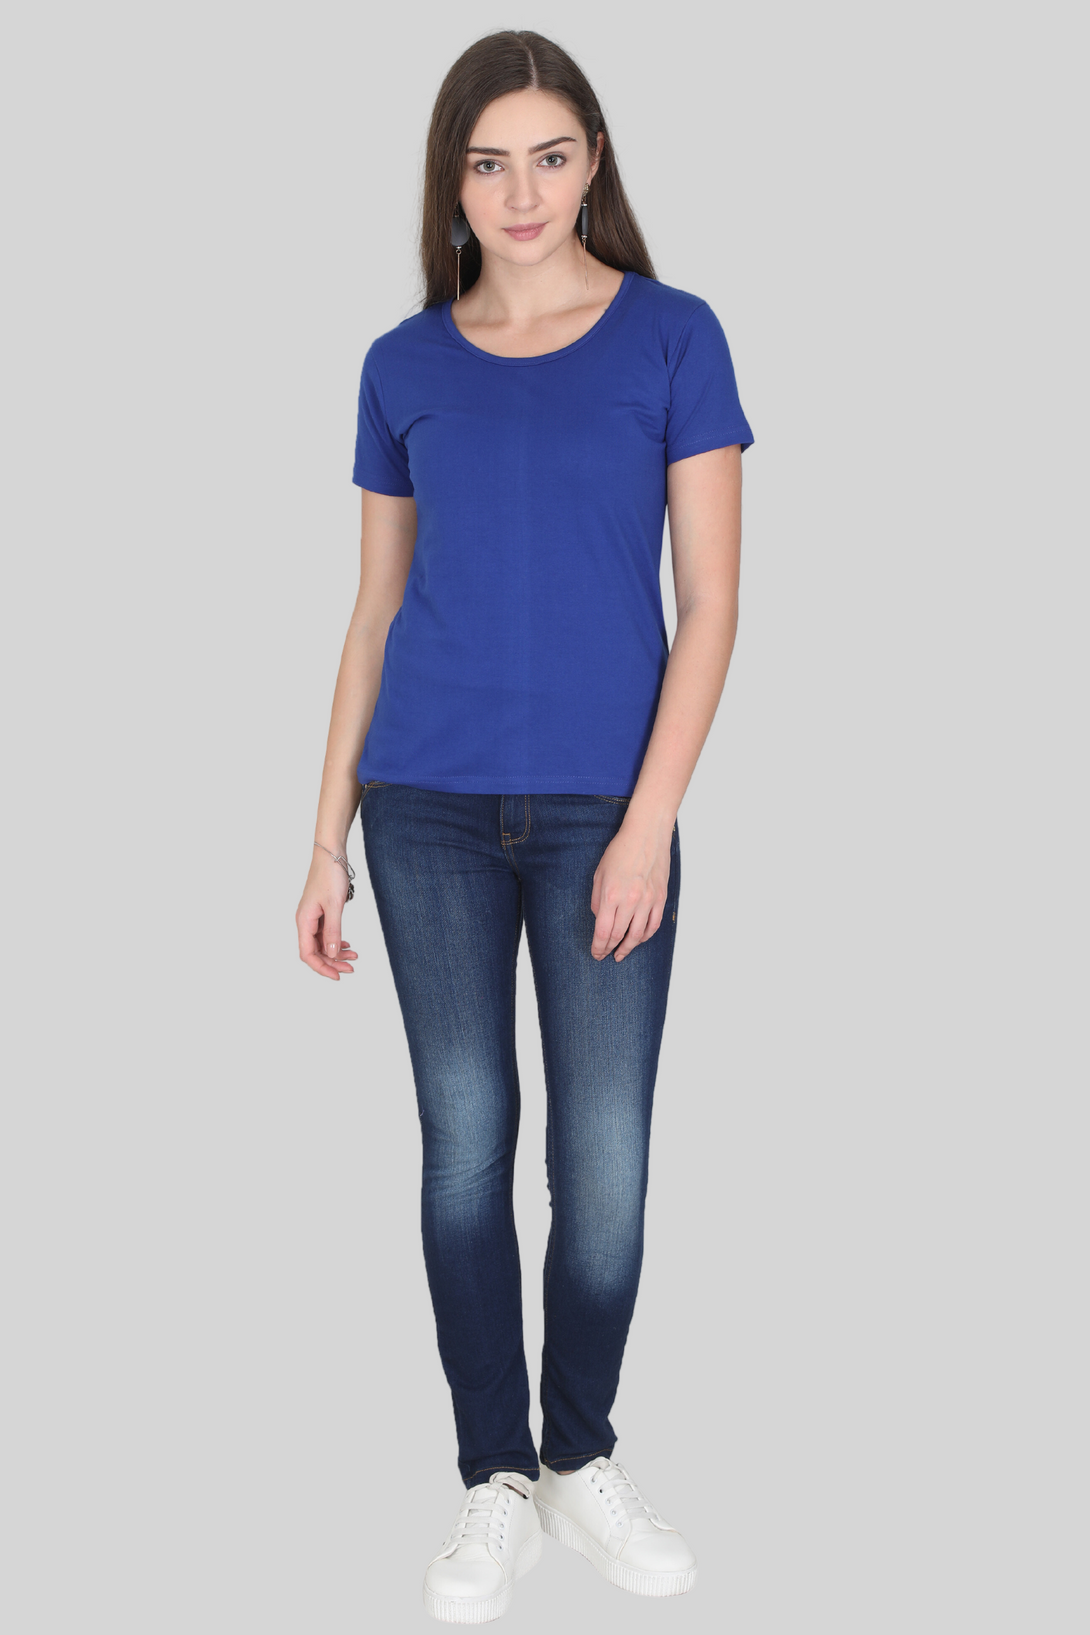 Royal Blue Scoop Neck T-Shirt For Women - WowWaves - 2